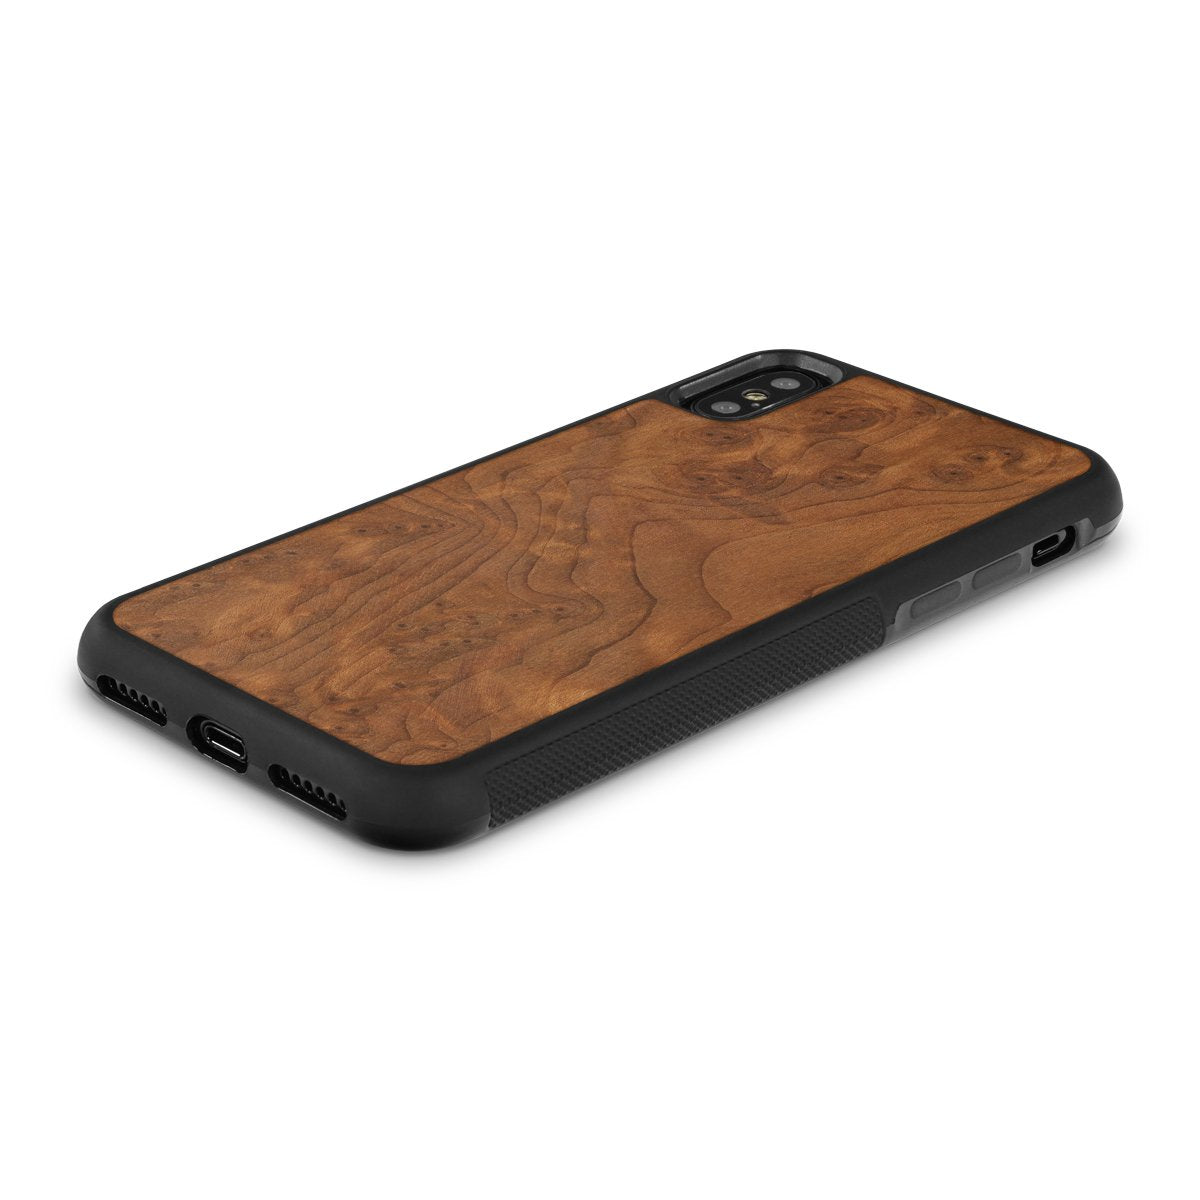 iPhone XS — #WoodBack Explorer Case